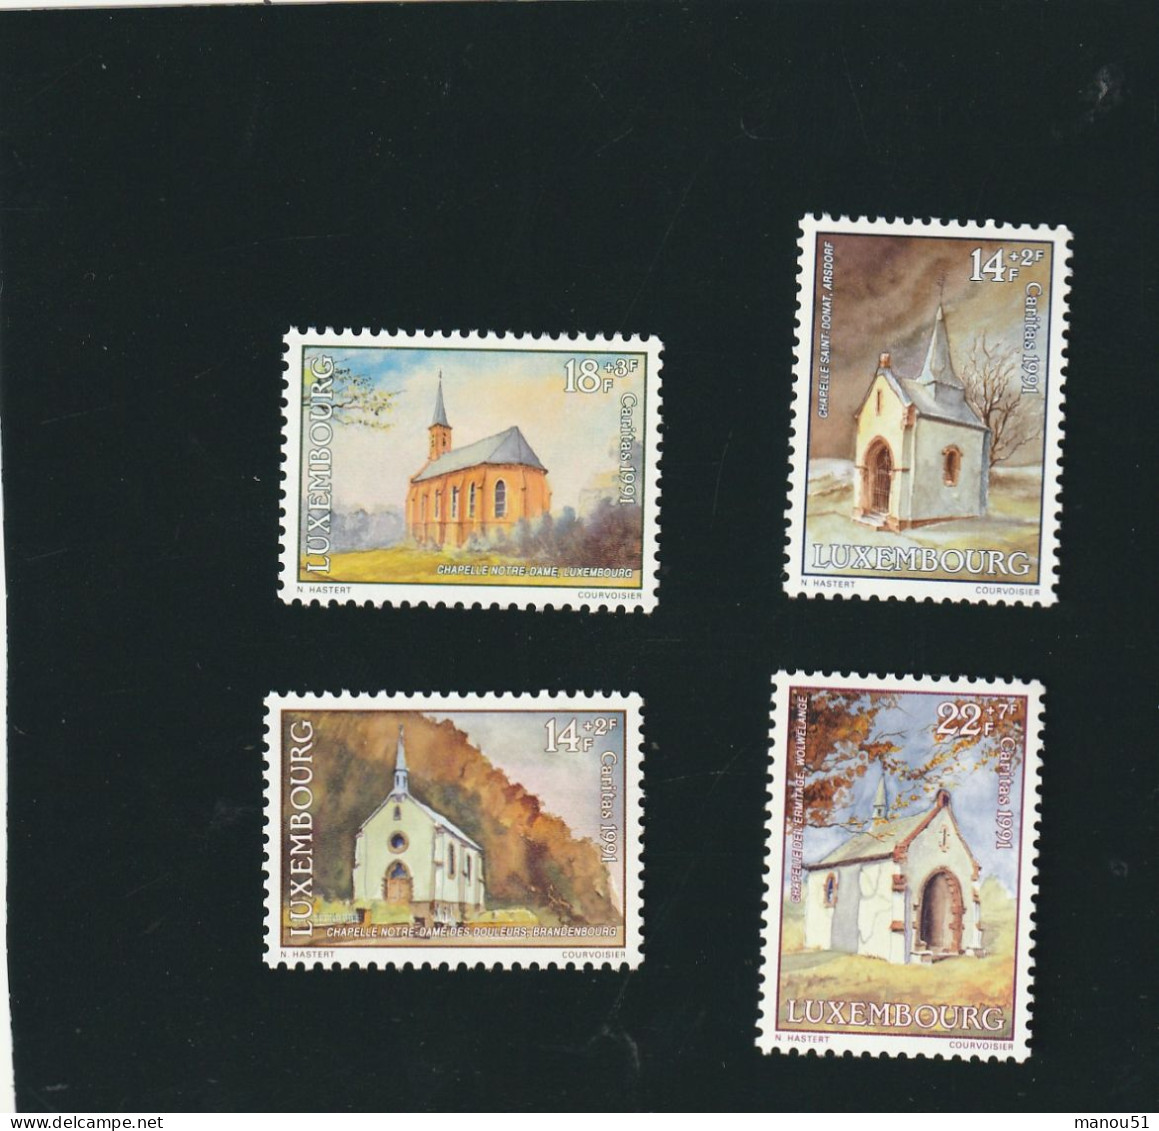 LUXEMBOURG - Emission Du 9.12.1991 - Lot 4 Timbres + 1 Enveloppe 1er Jour & 1 Carte De Voeux - Unused Stamps